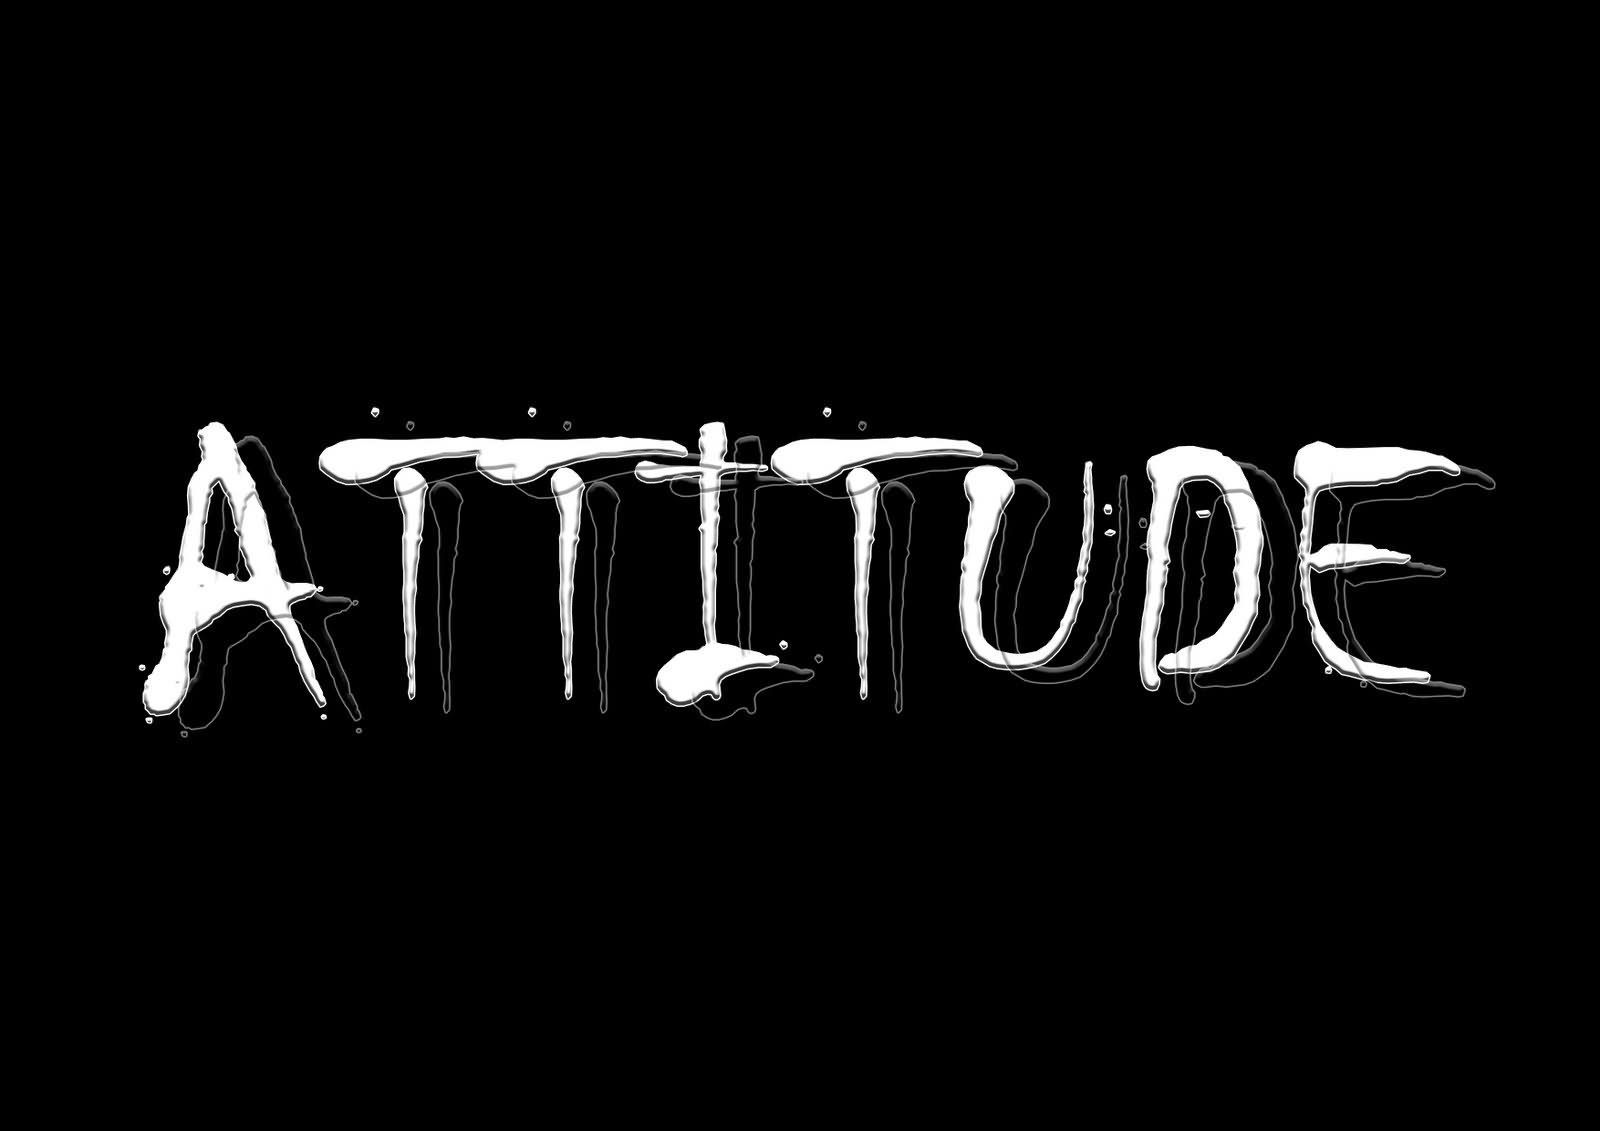 Wallpaper On Attitude